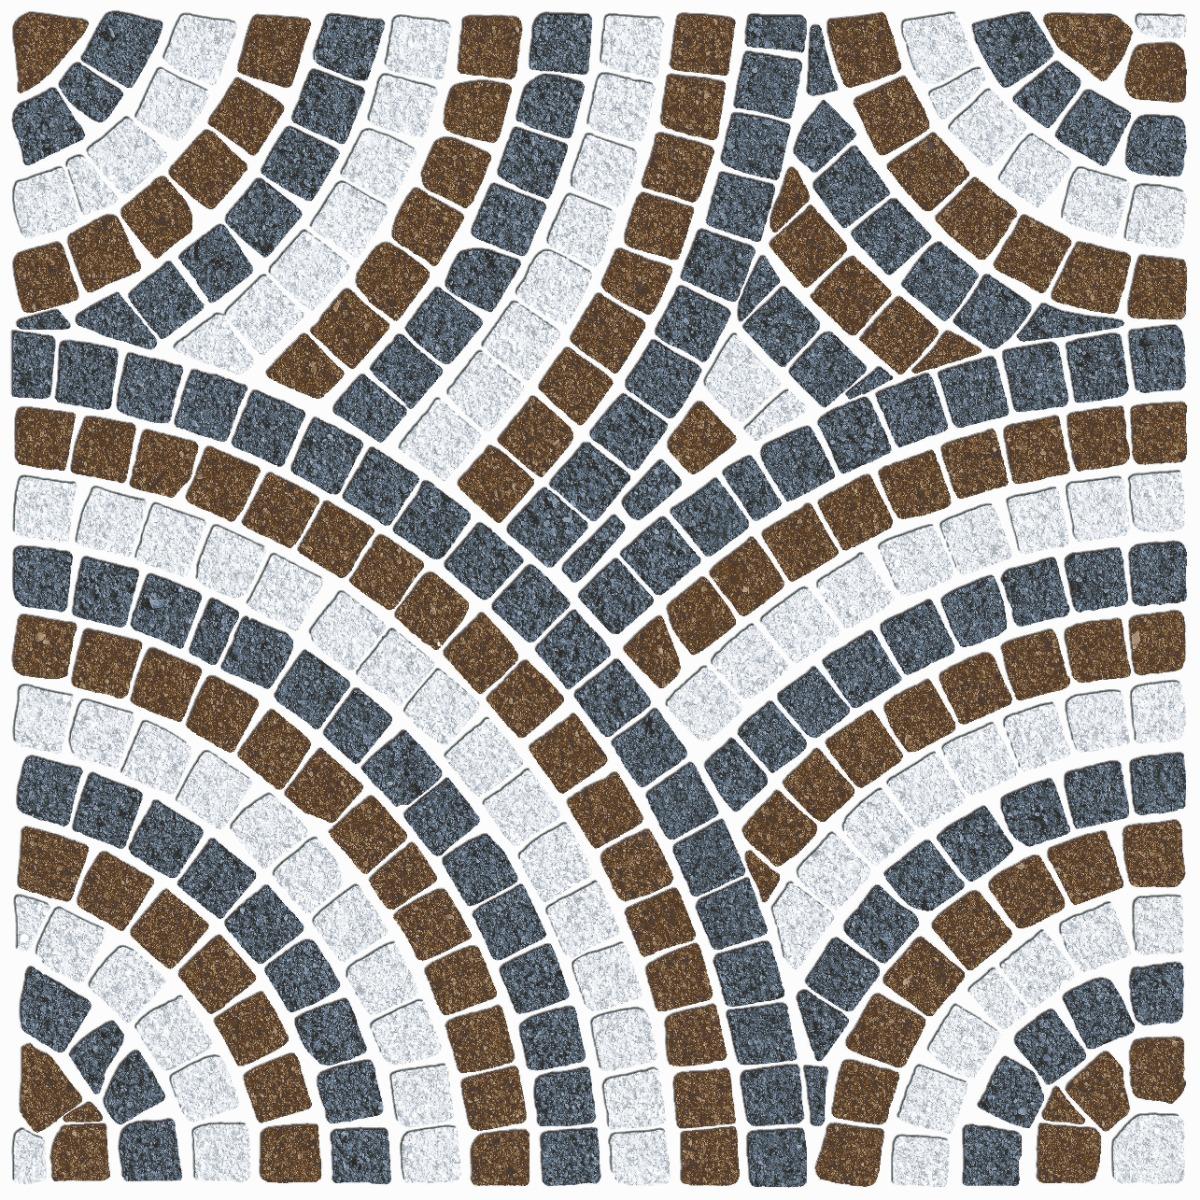 Blue Tiles for Balcony Tiles, Parking Tiles, Terrace Tiles, Pathway Tiles, High Traffic Tiles, Commercial/Office, Outdoor Area